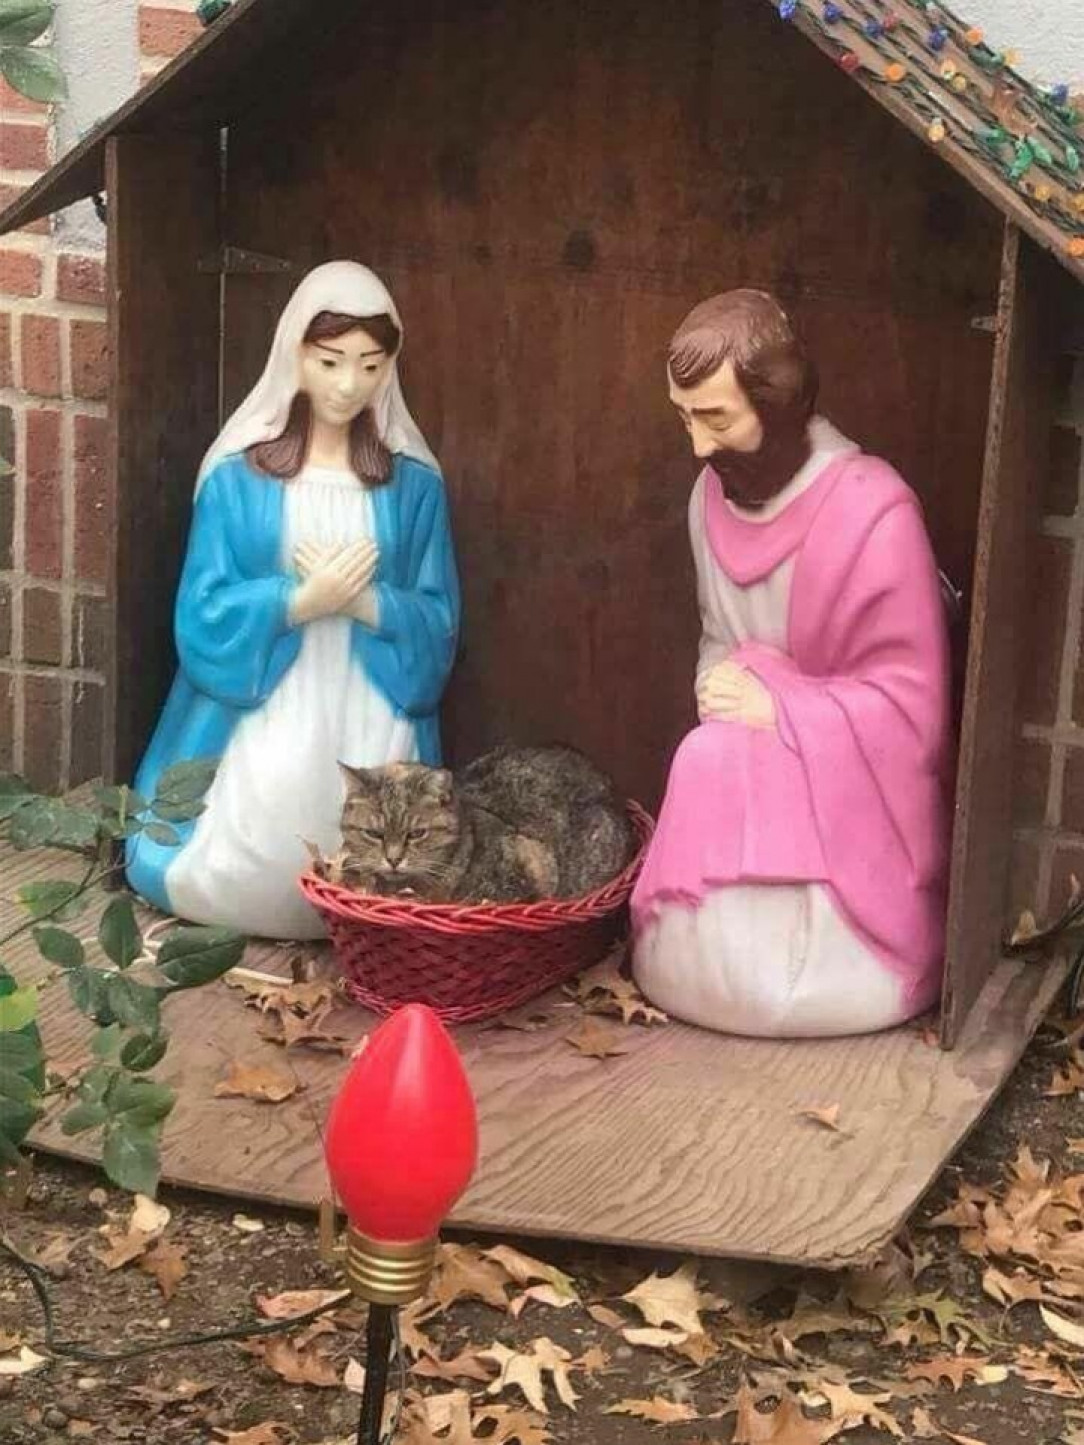 “Fuck off. I’m baby Jesus” 😻